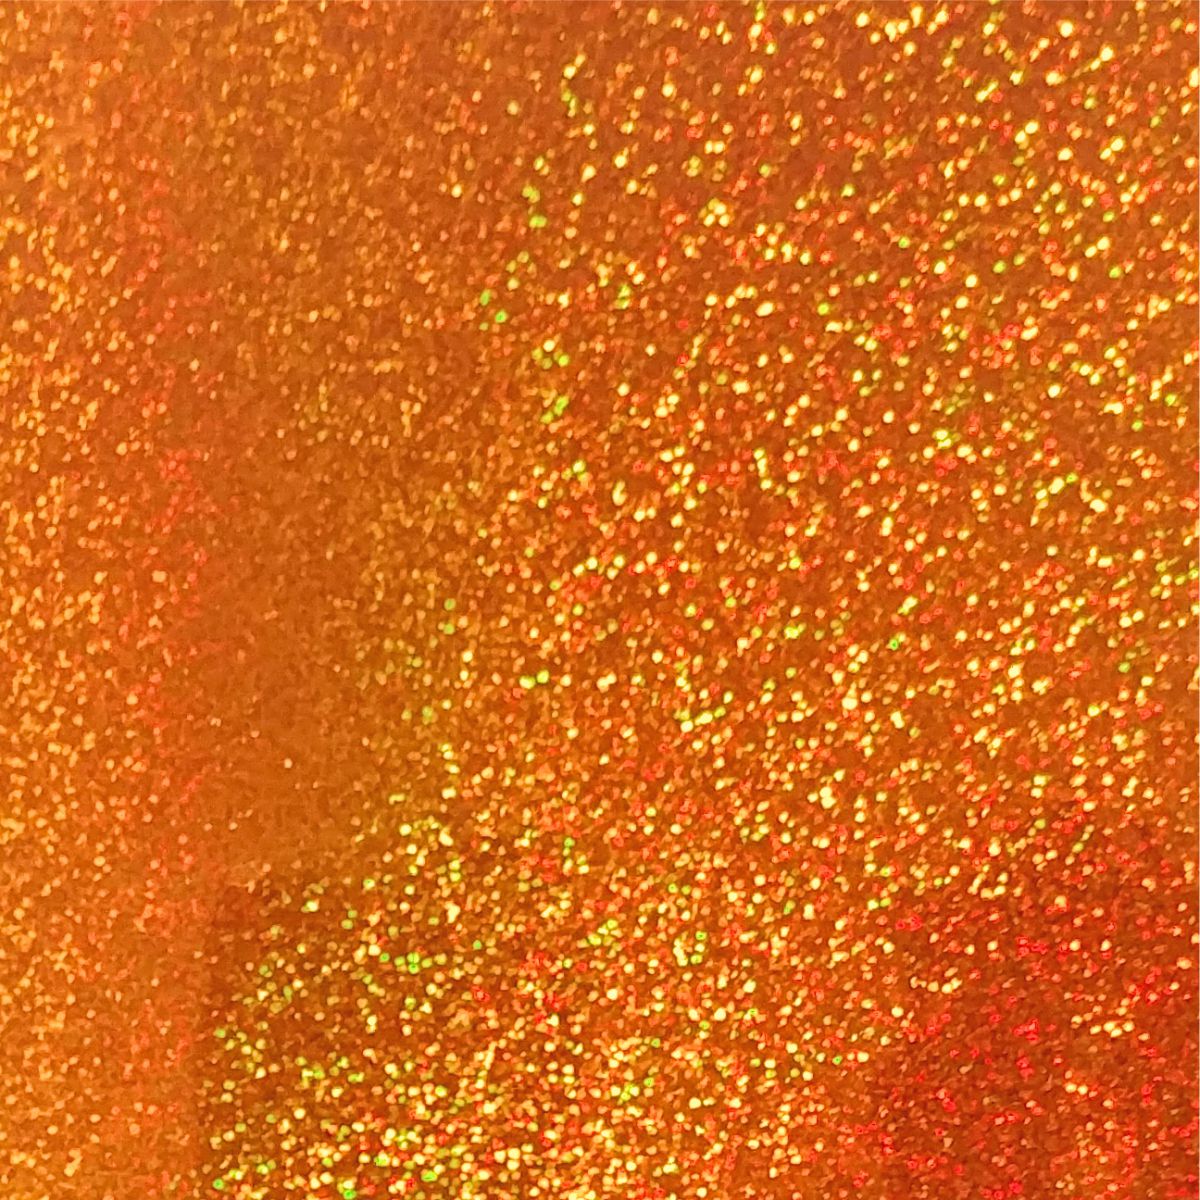 Holo Glitter Orange Adhesive Vinyl Choose Your Length